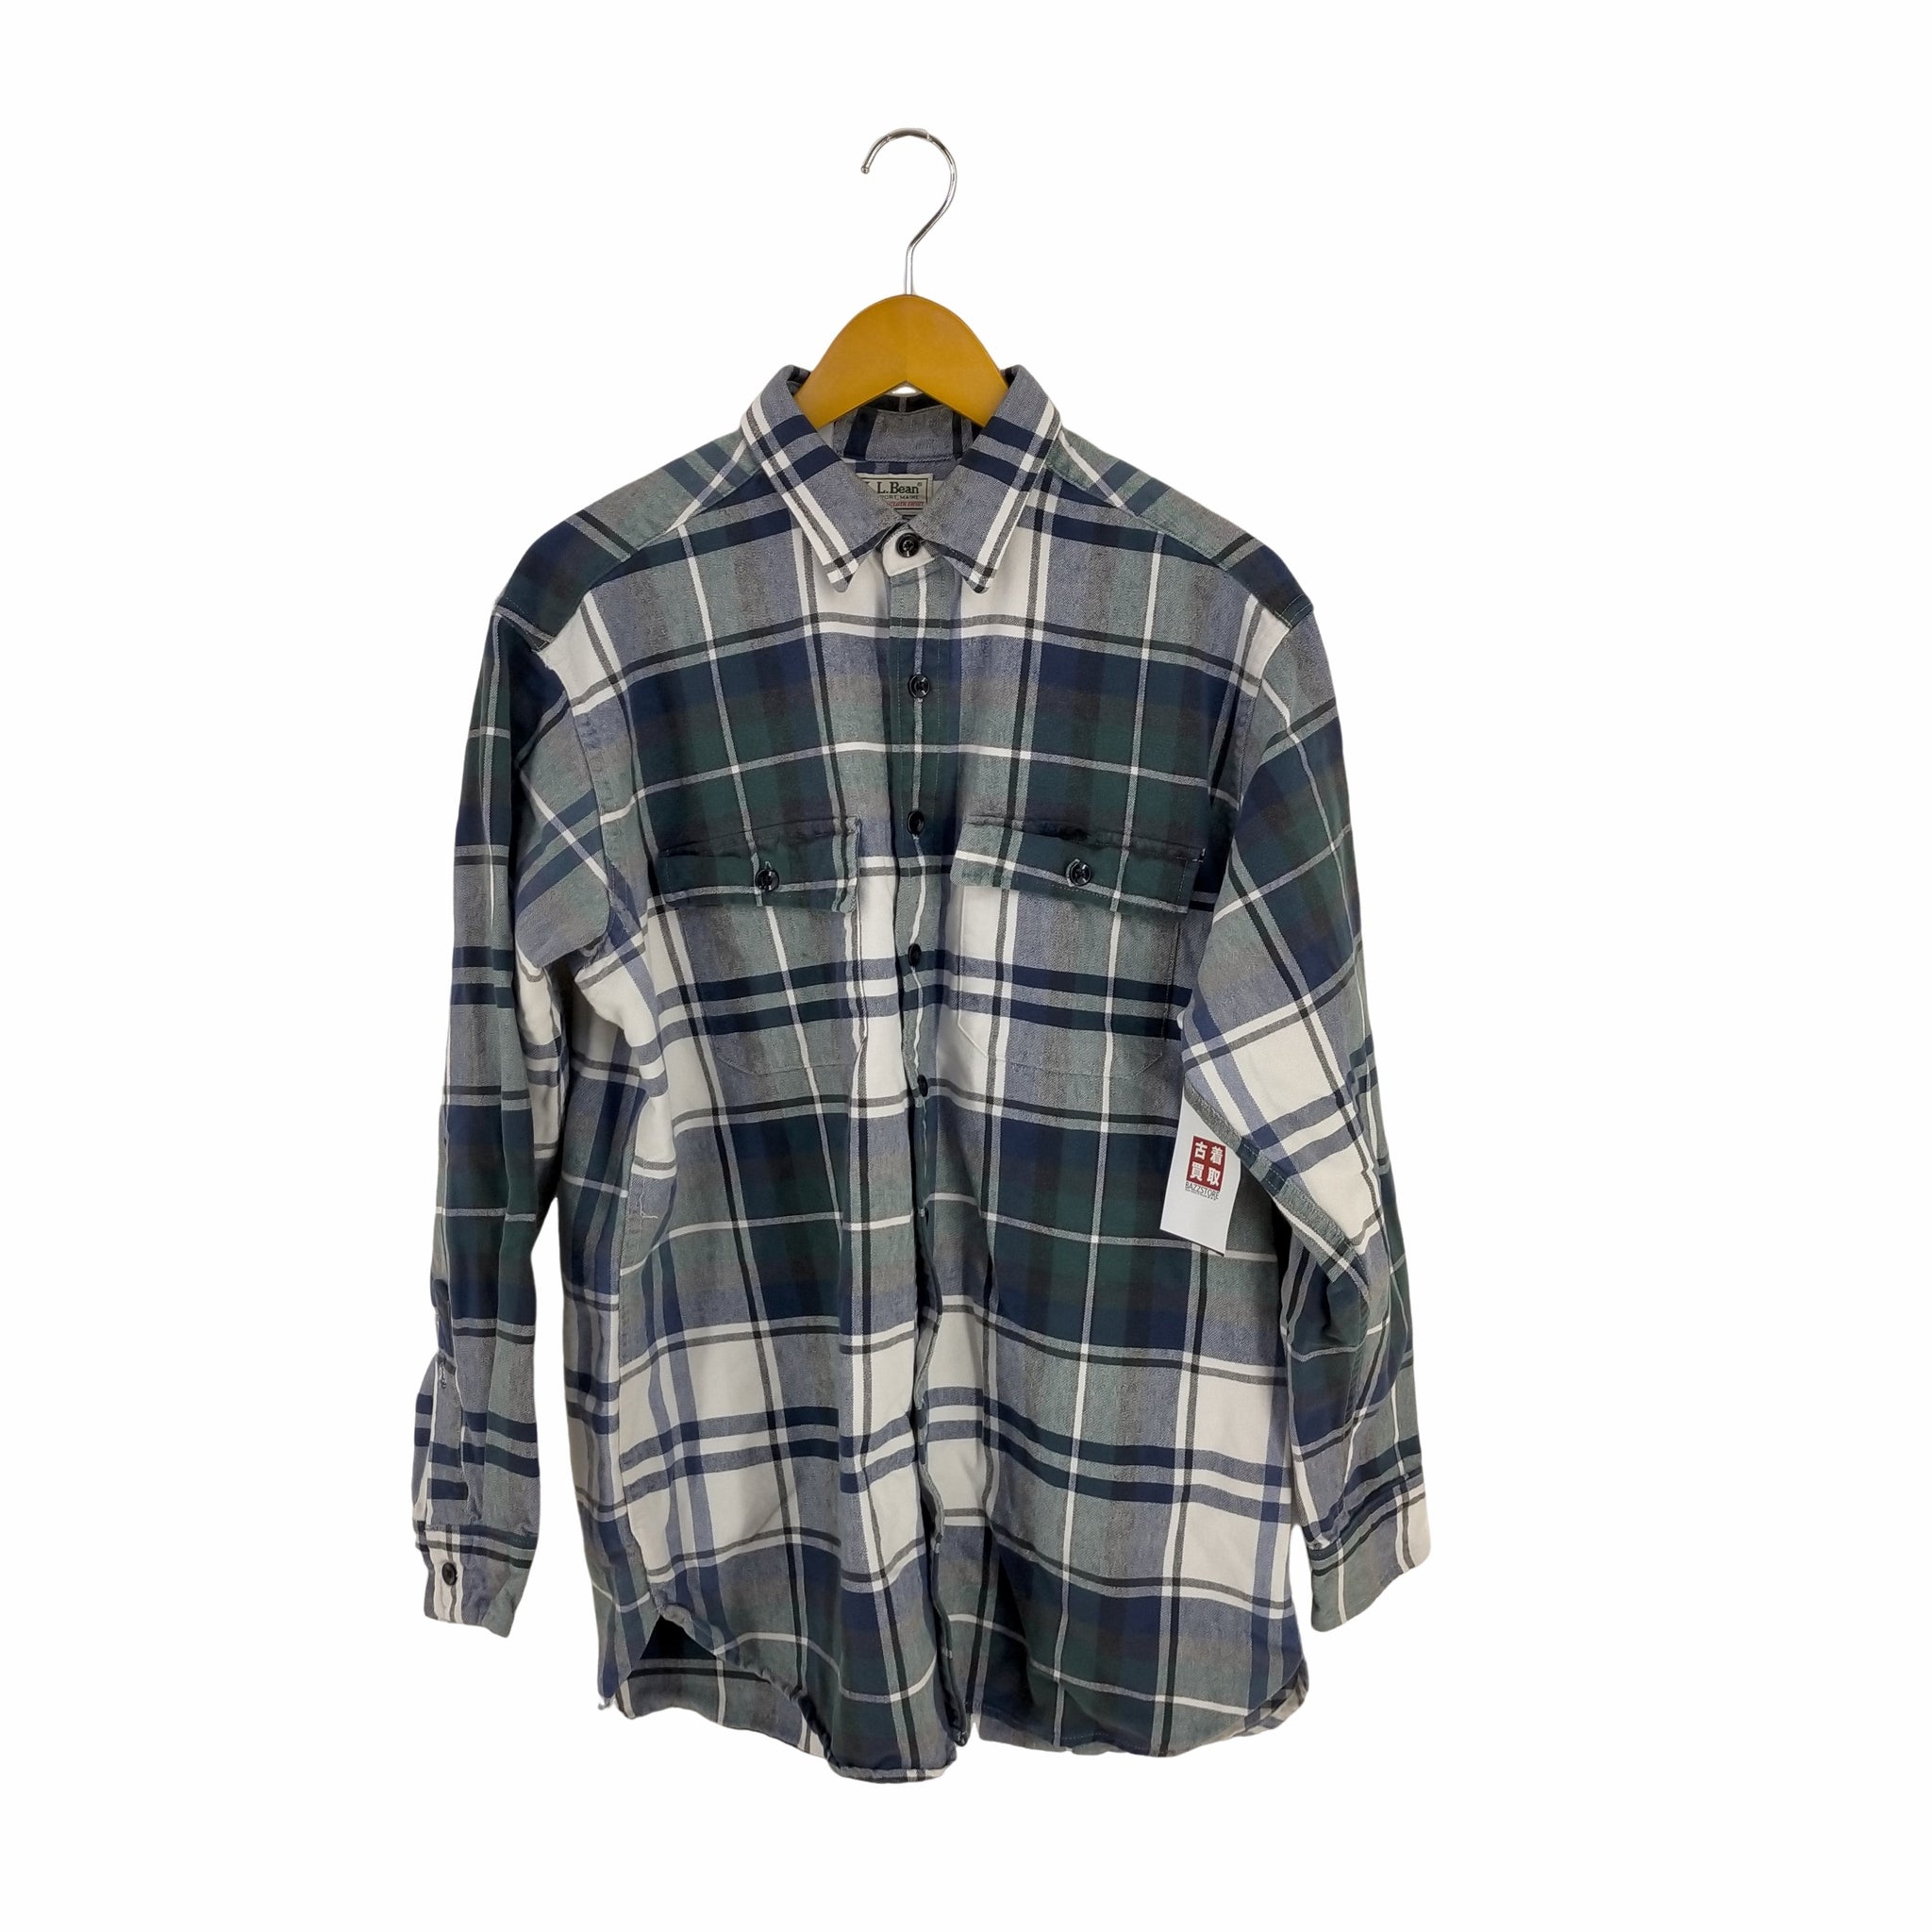 L.L.Bean(エルエルビーン)80s chamois cloth shirt